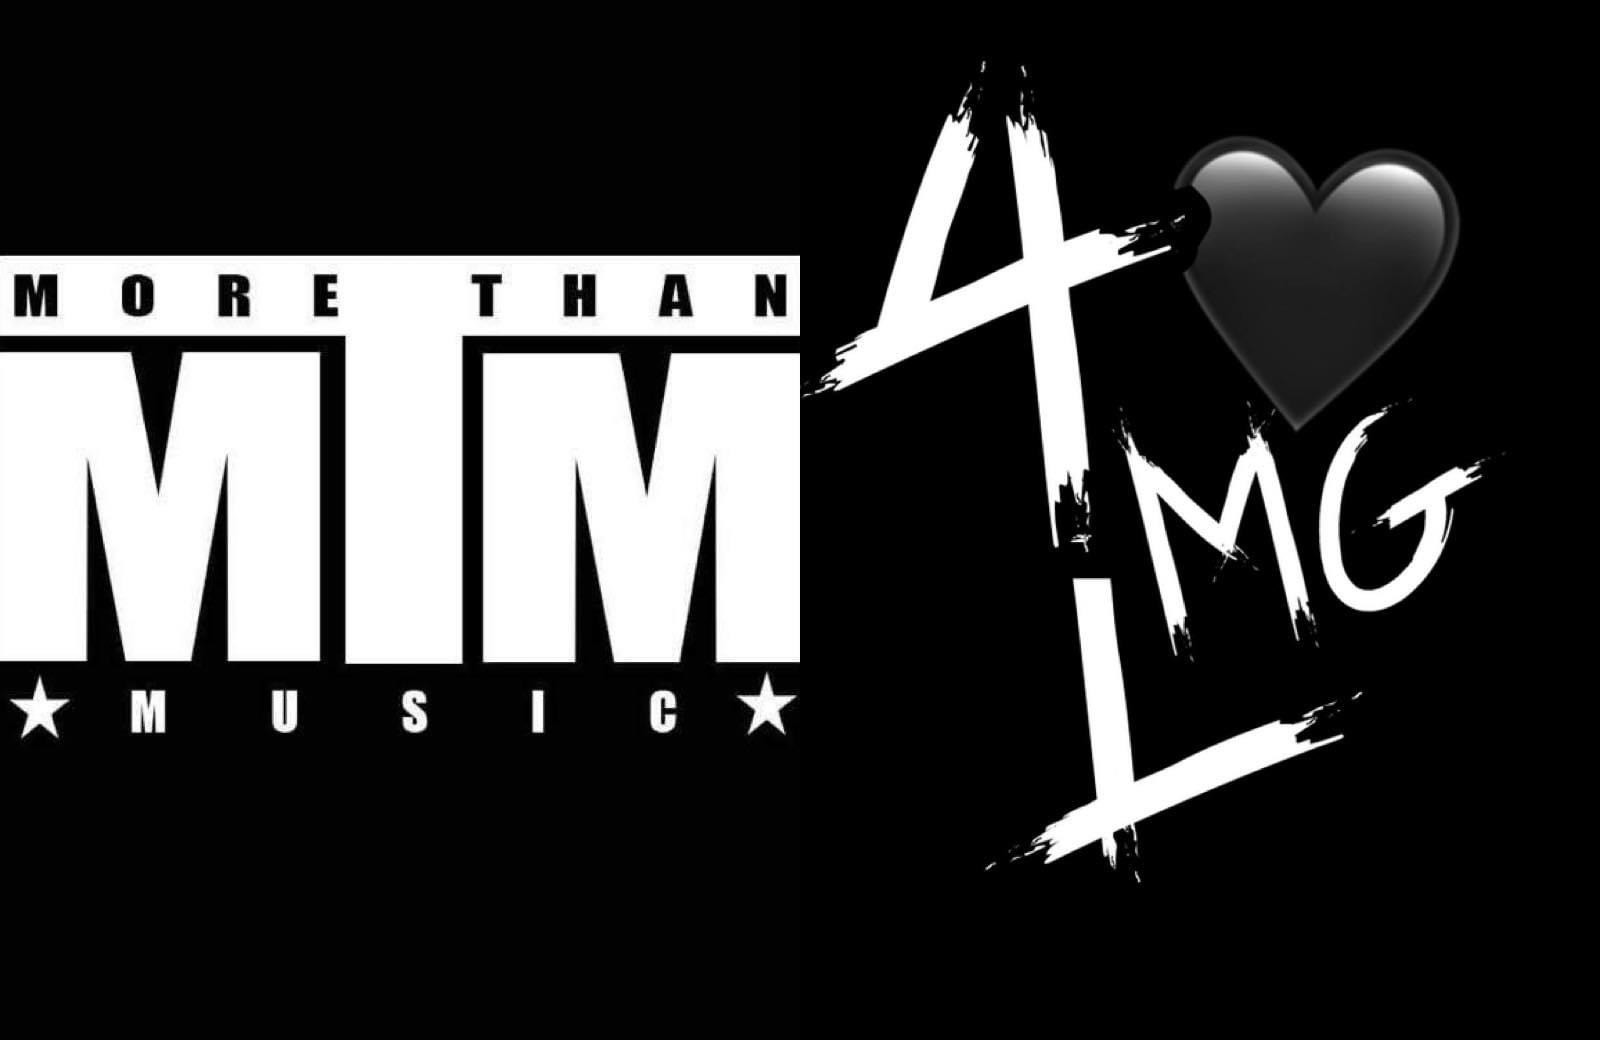 Yung Rydah Introduces His Label MTM4LMG